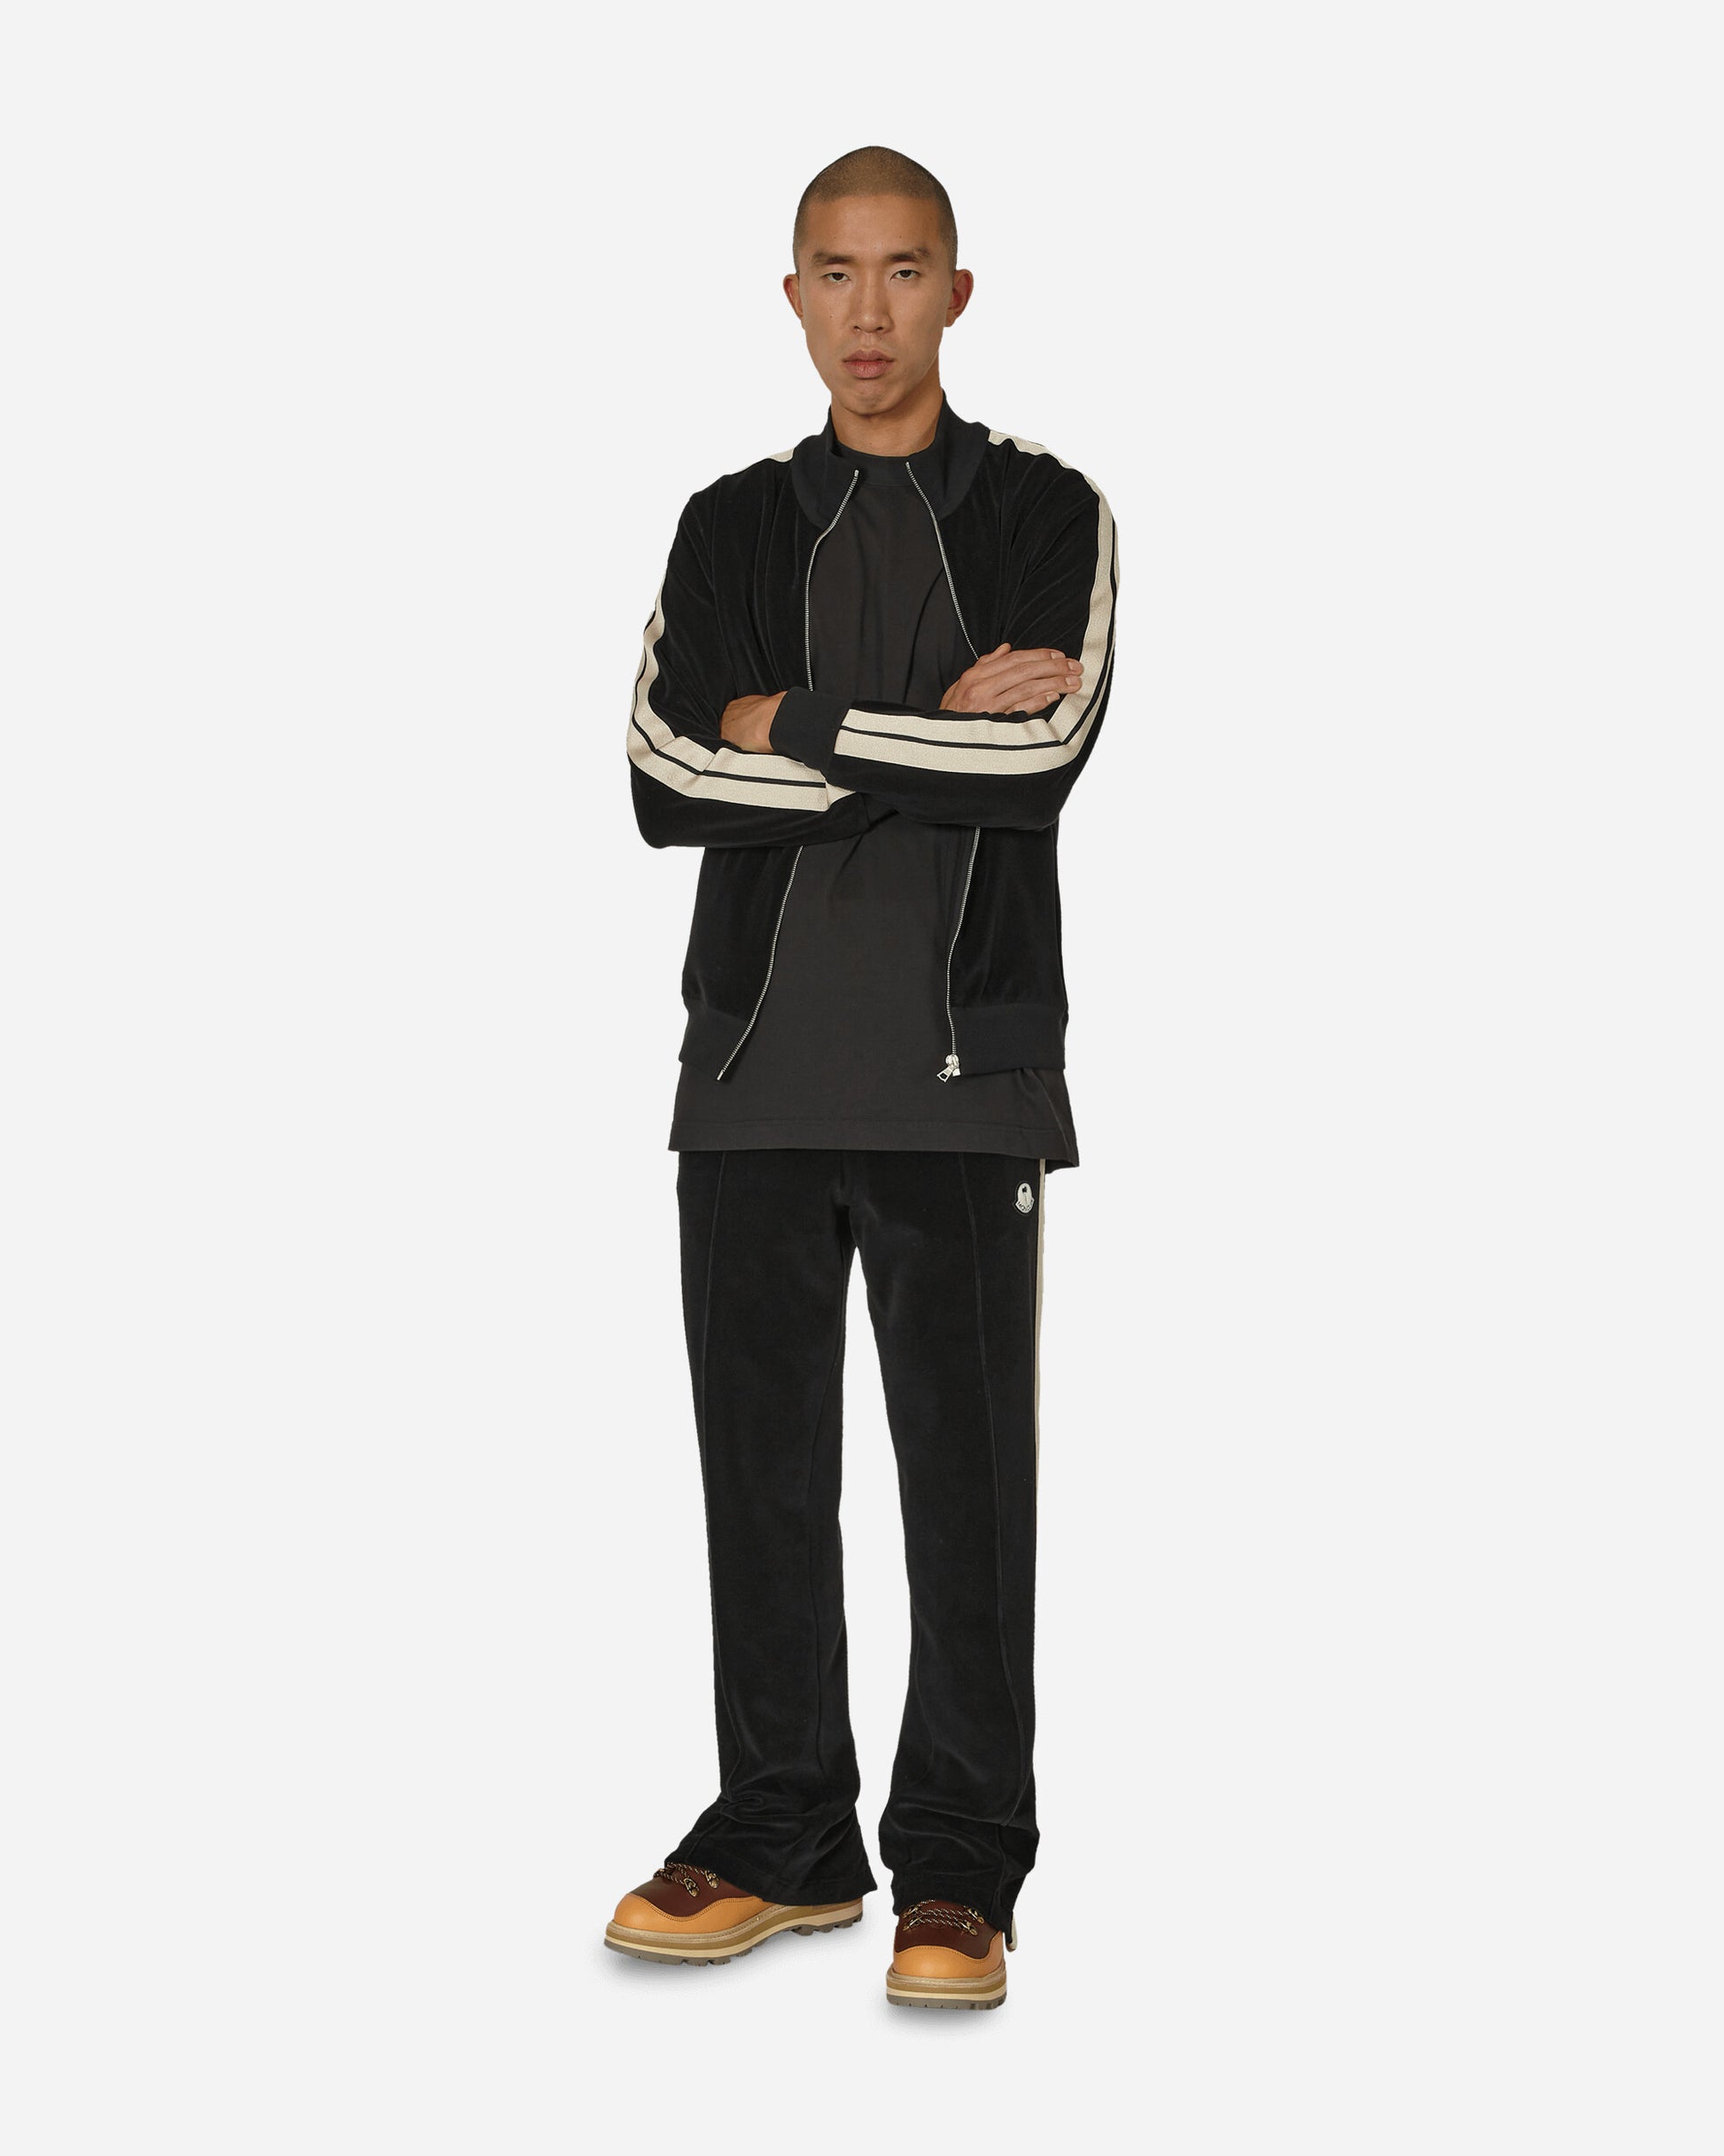 Moncler Genius Zip Up Cardigan X Palm Angels Black Sweatshirts Track Tops 8G0000189A6S 999